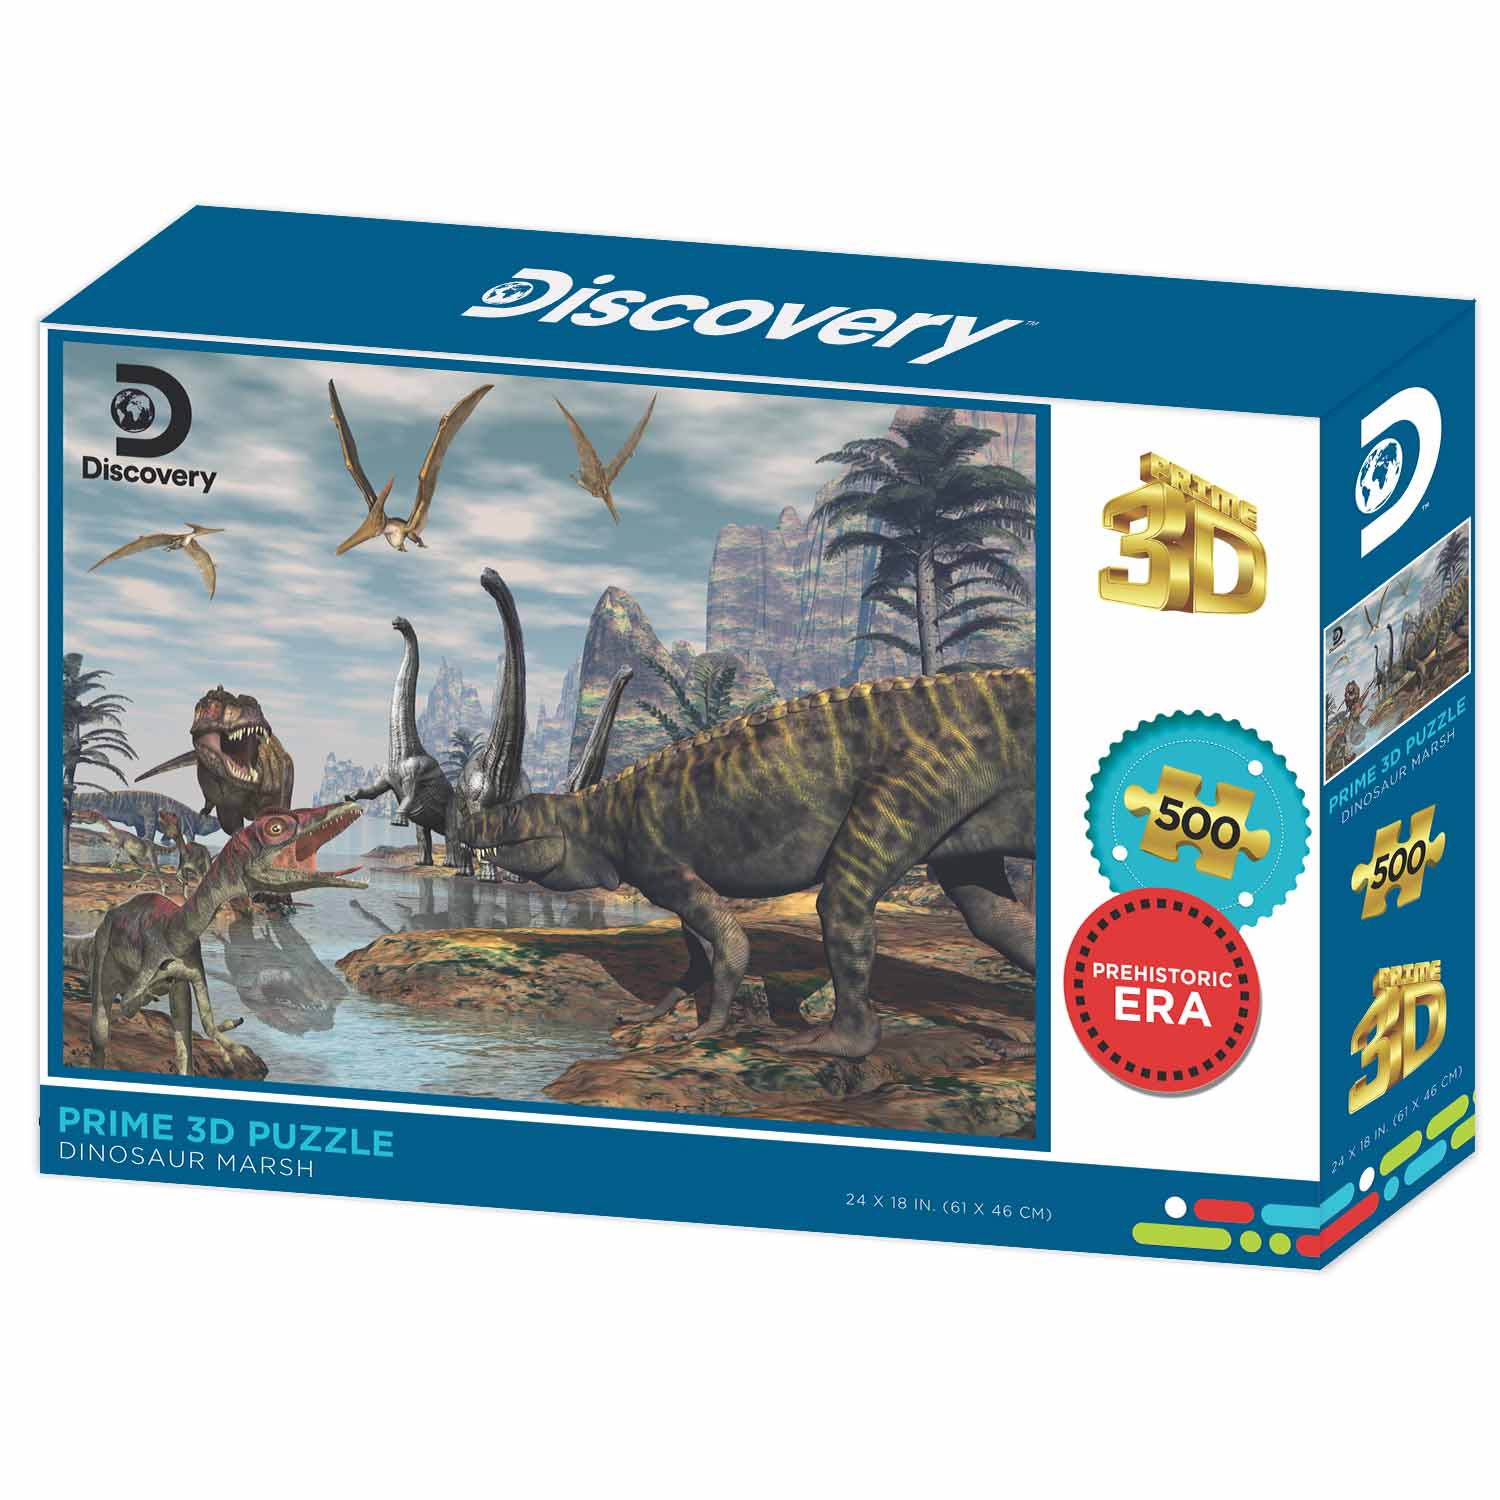 Dinosaur Marsh - Discovery Dinosaurs Jigsaw Puzzle